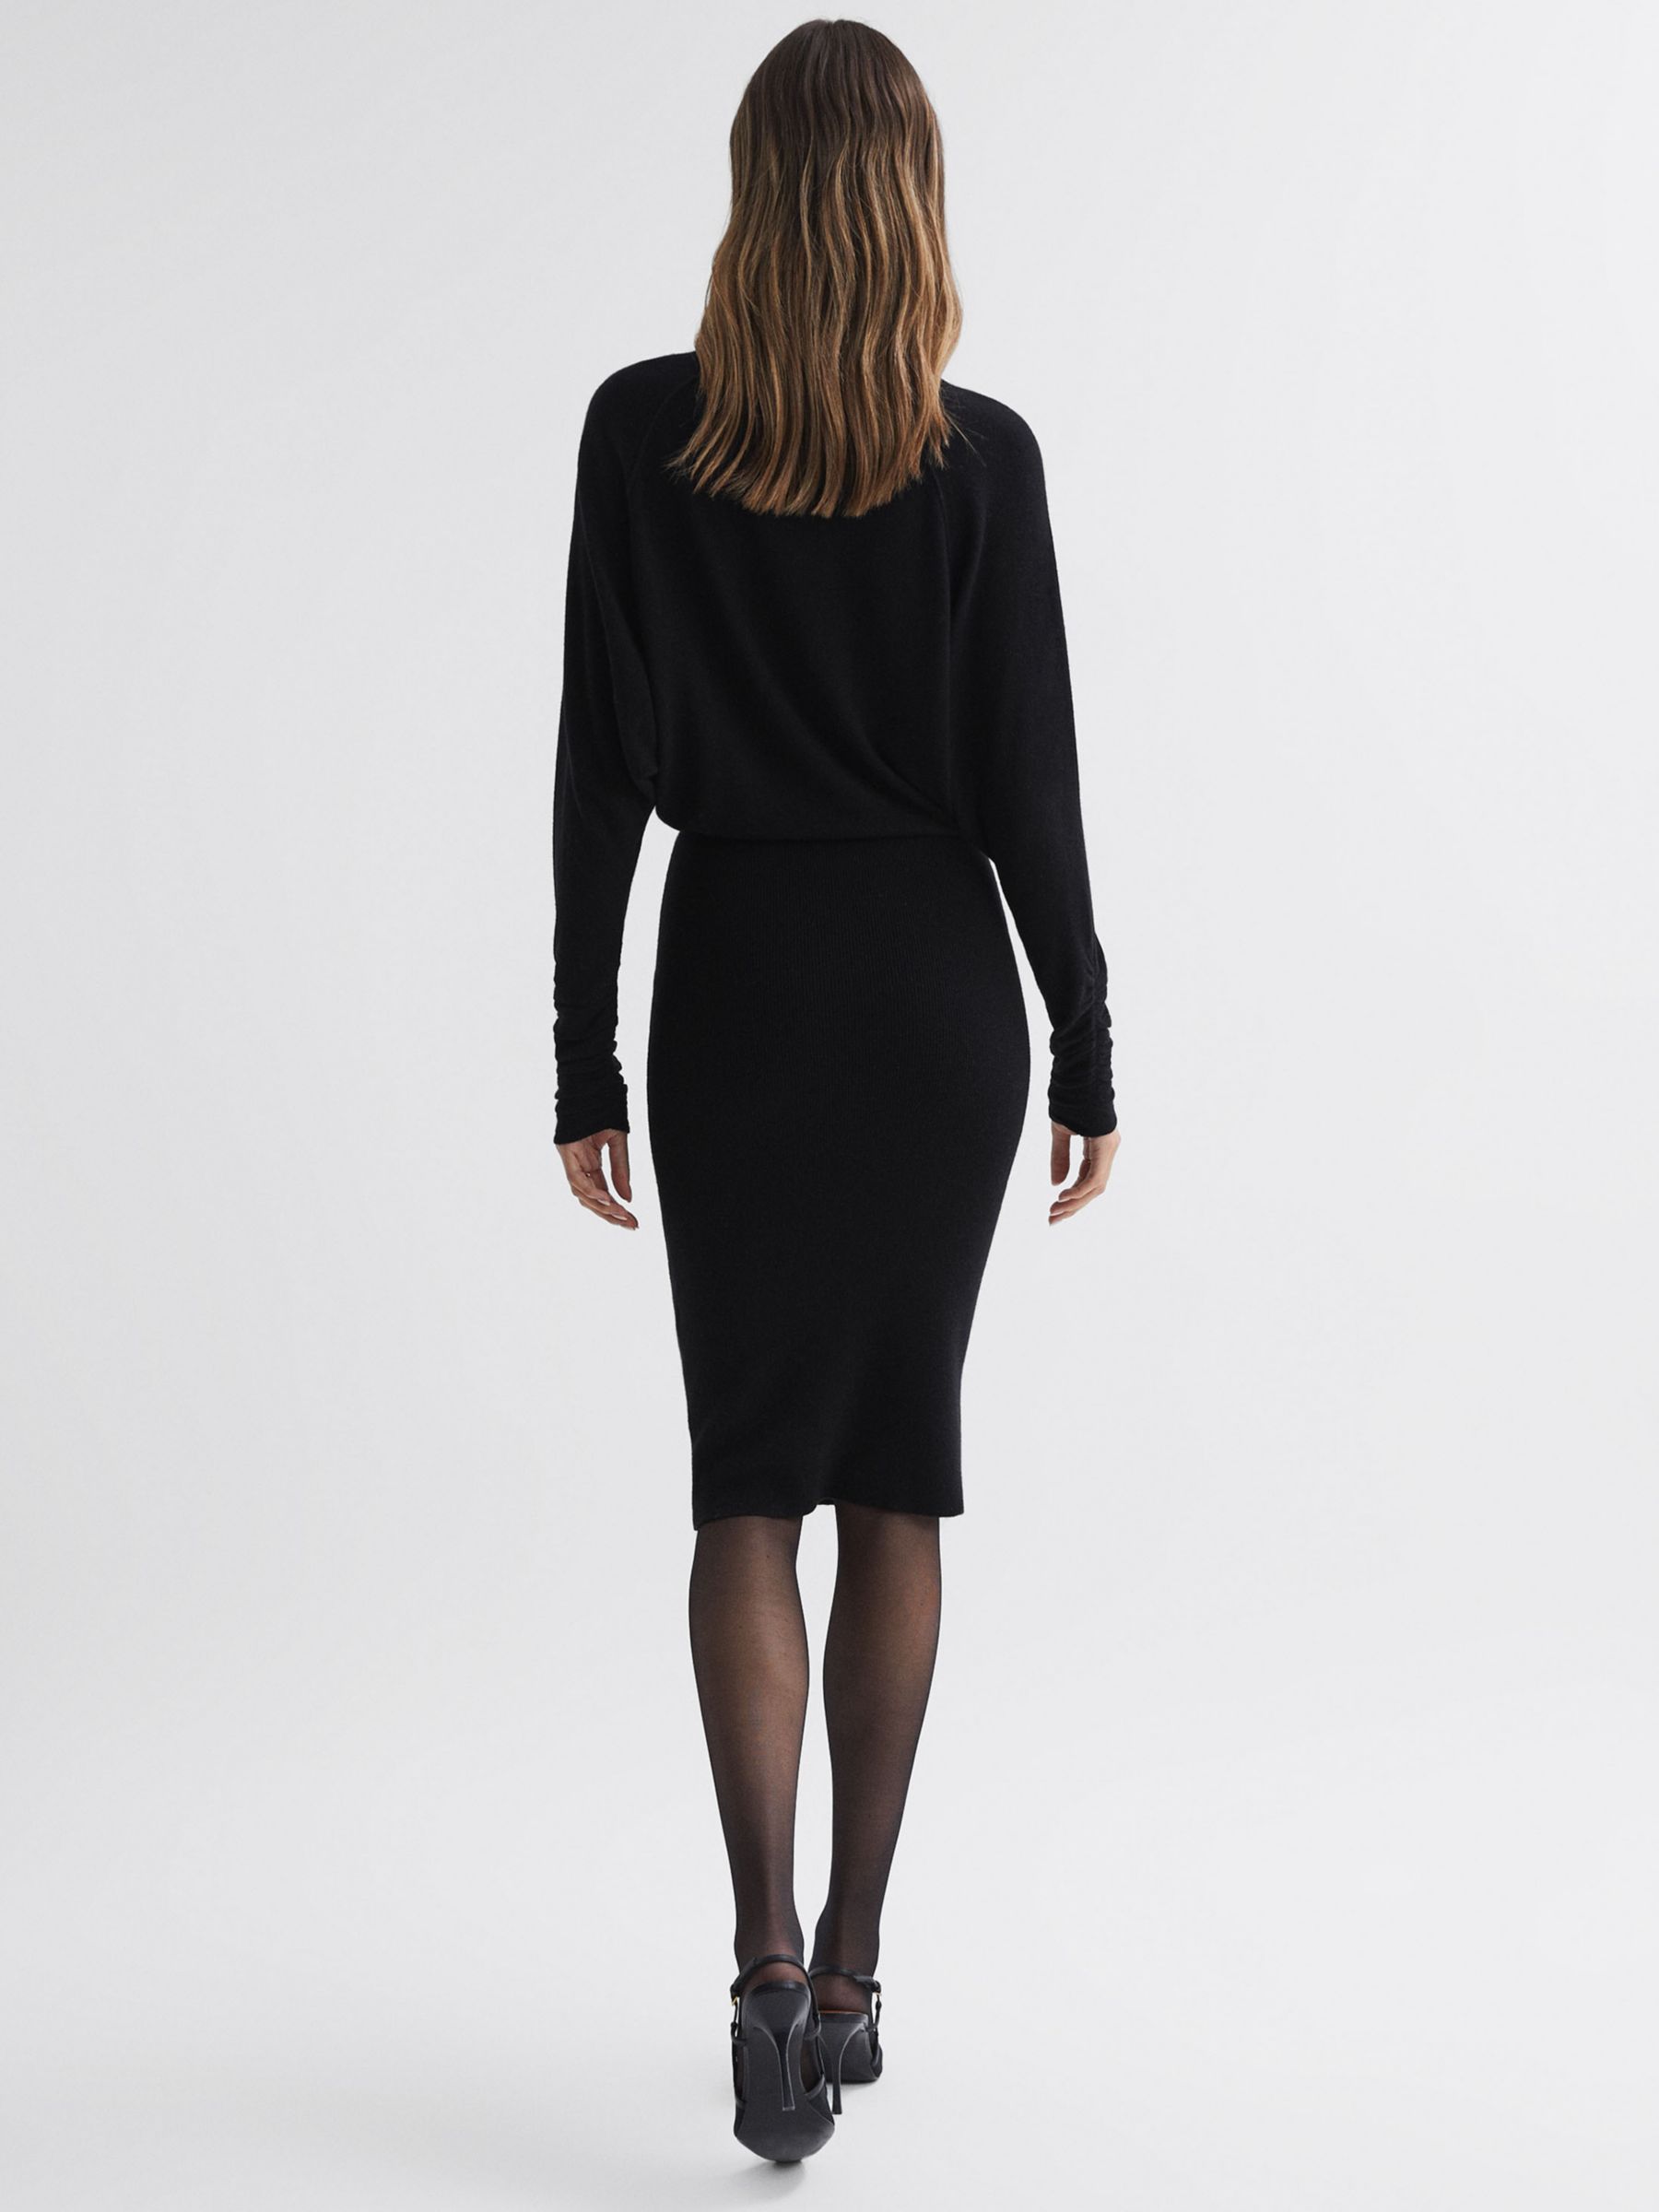 Reiss Freya Knitted High Neck Dress, Black at John Lewis & Partners